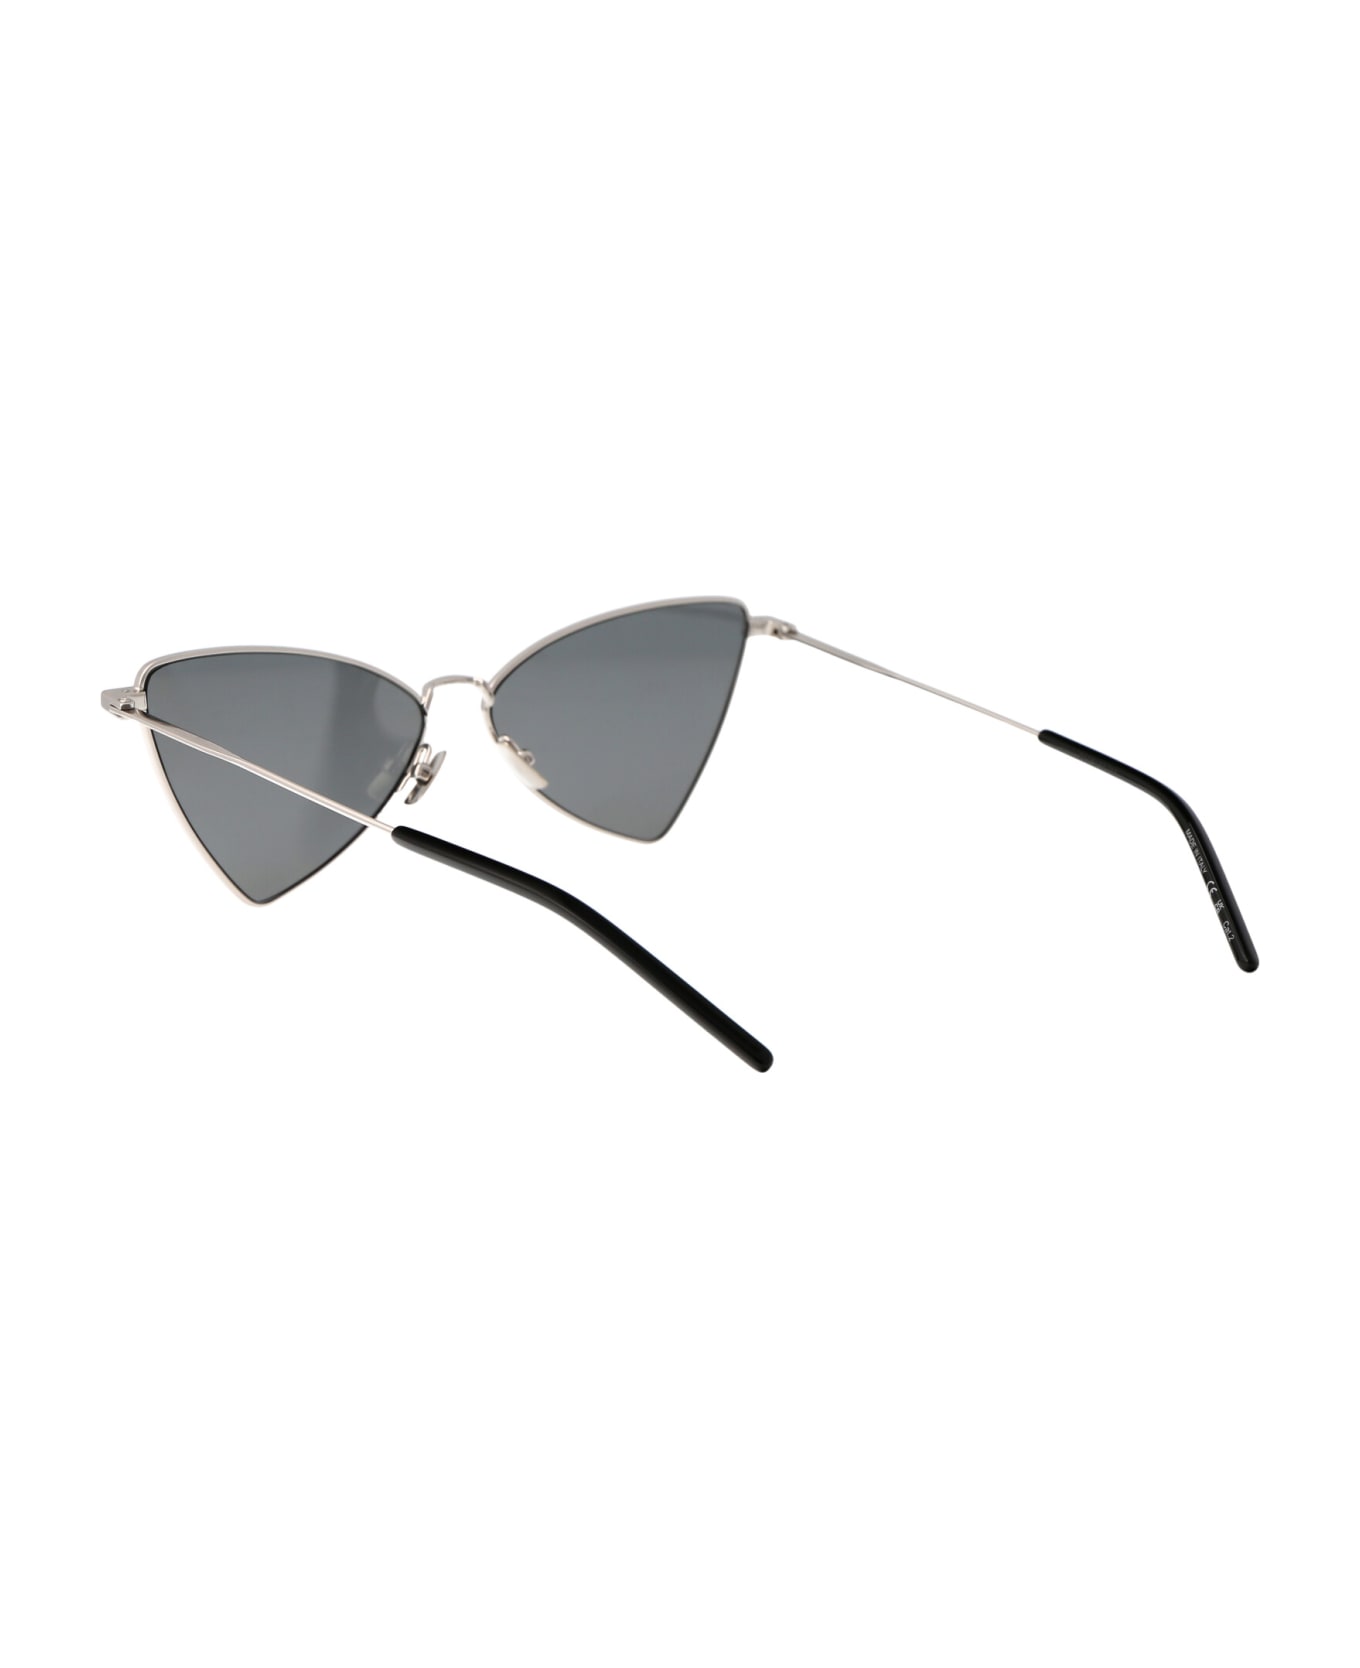 Saint Laurent Eyewear Sl 303 Jerry Sunglasses - 010 SILVER SILVER SILVER